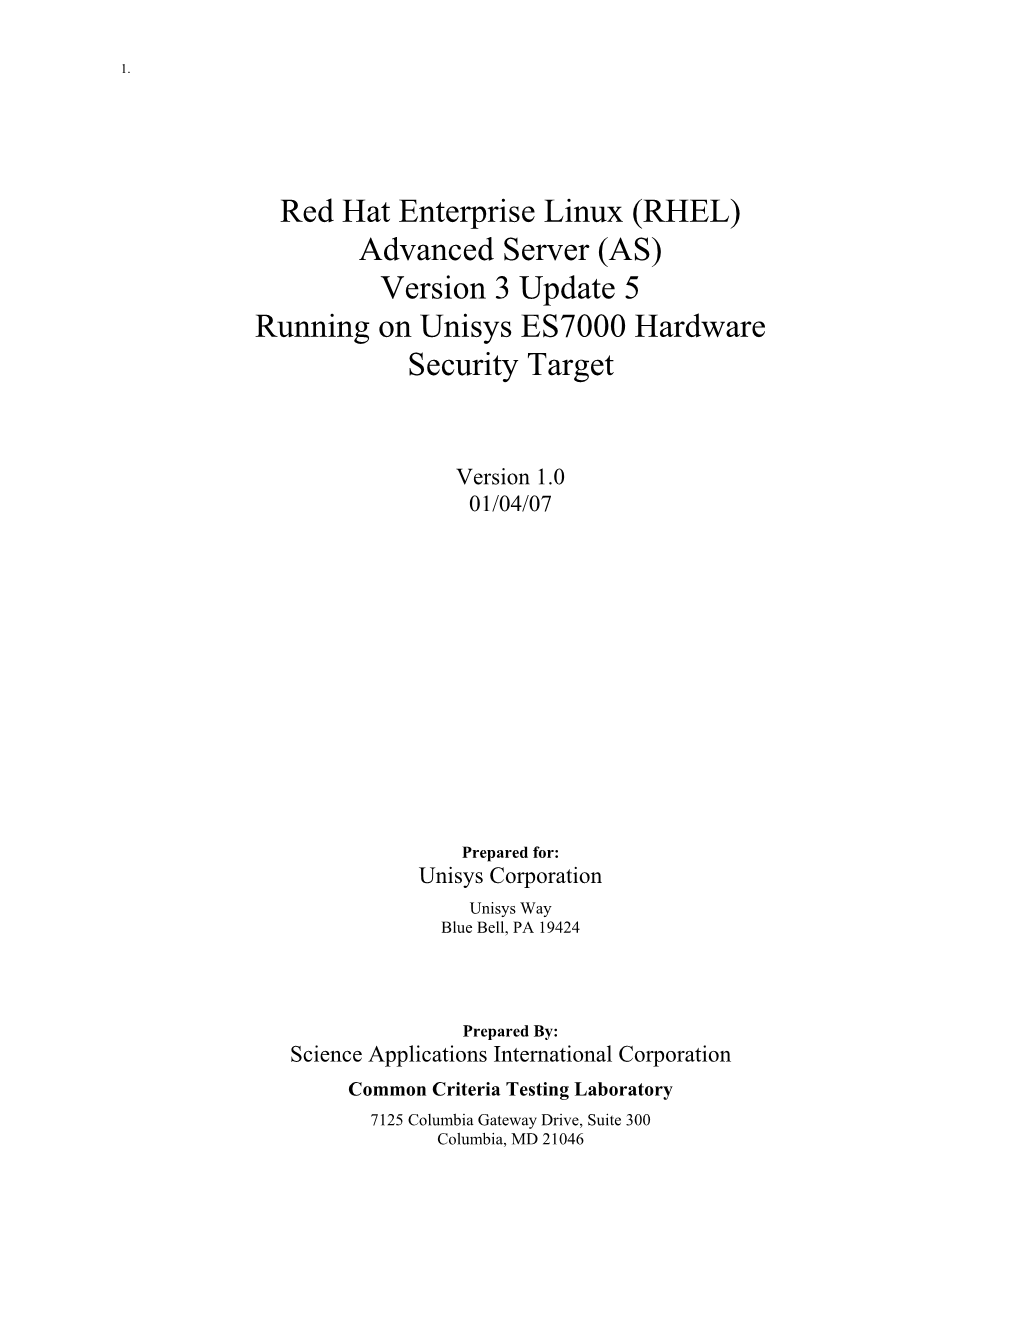 Red Hat Enterprise Linux (RHEL) Advanced Server (AS) Version 3 Update 5 Running on Unisys ES7000 Hardware Security Target